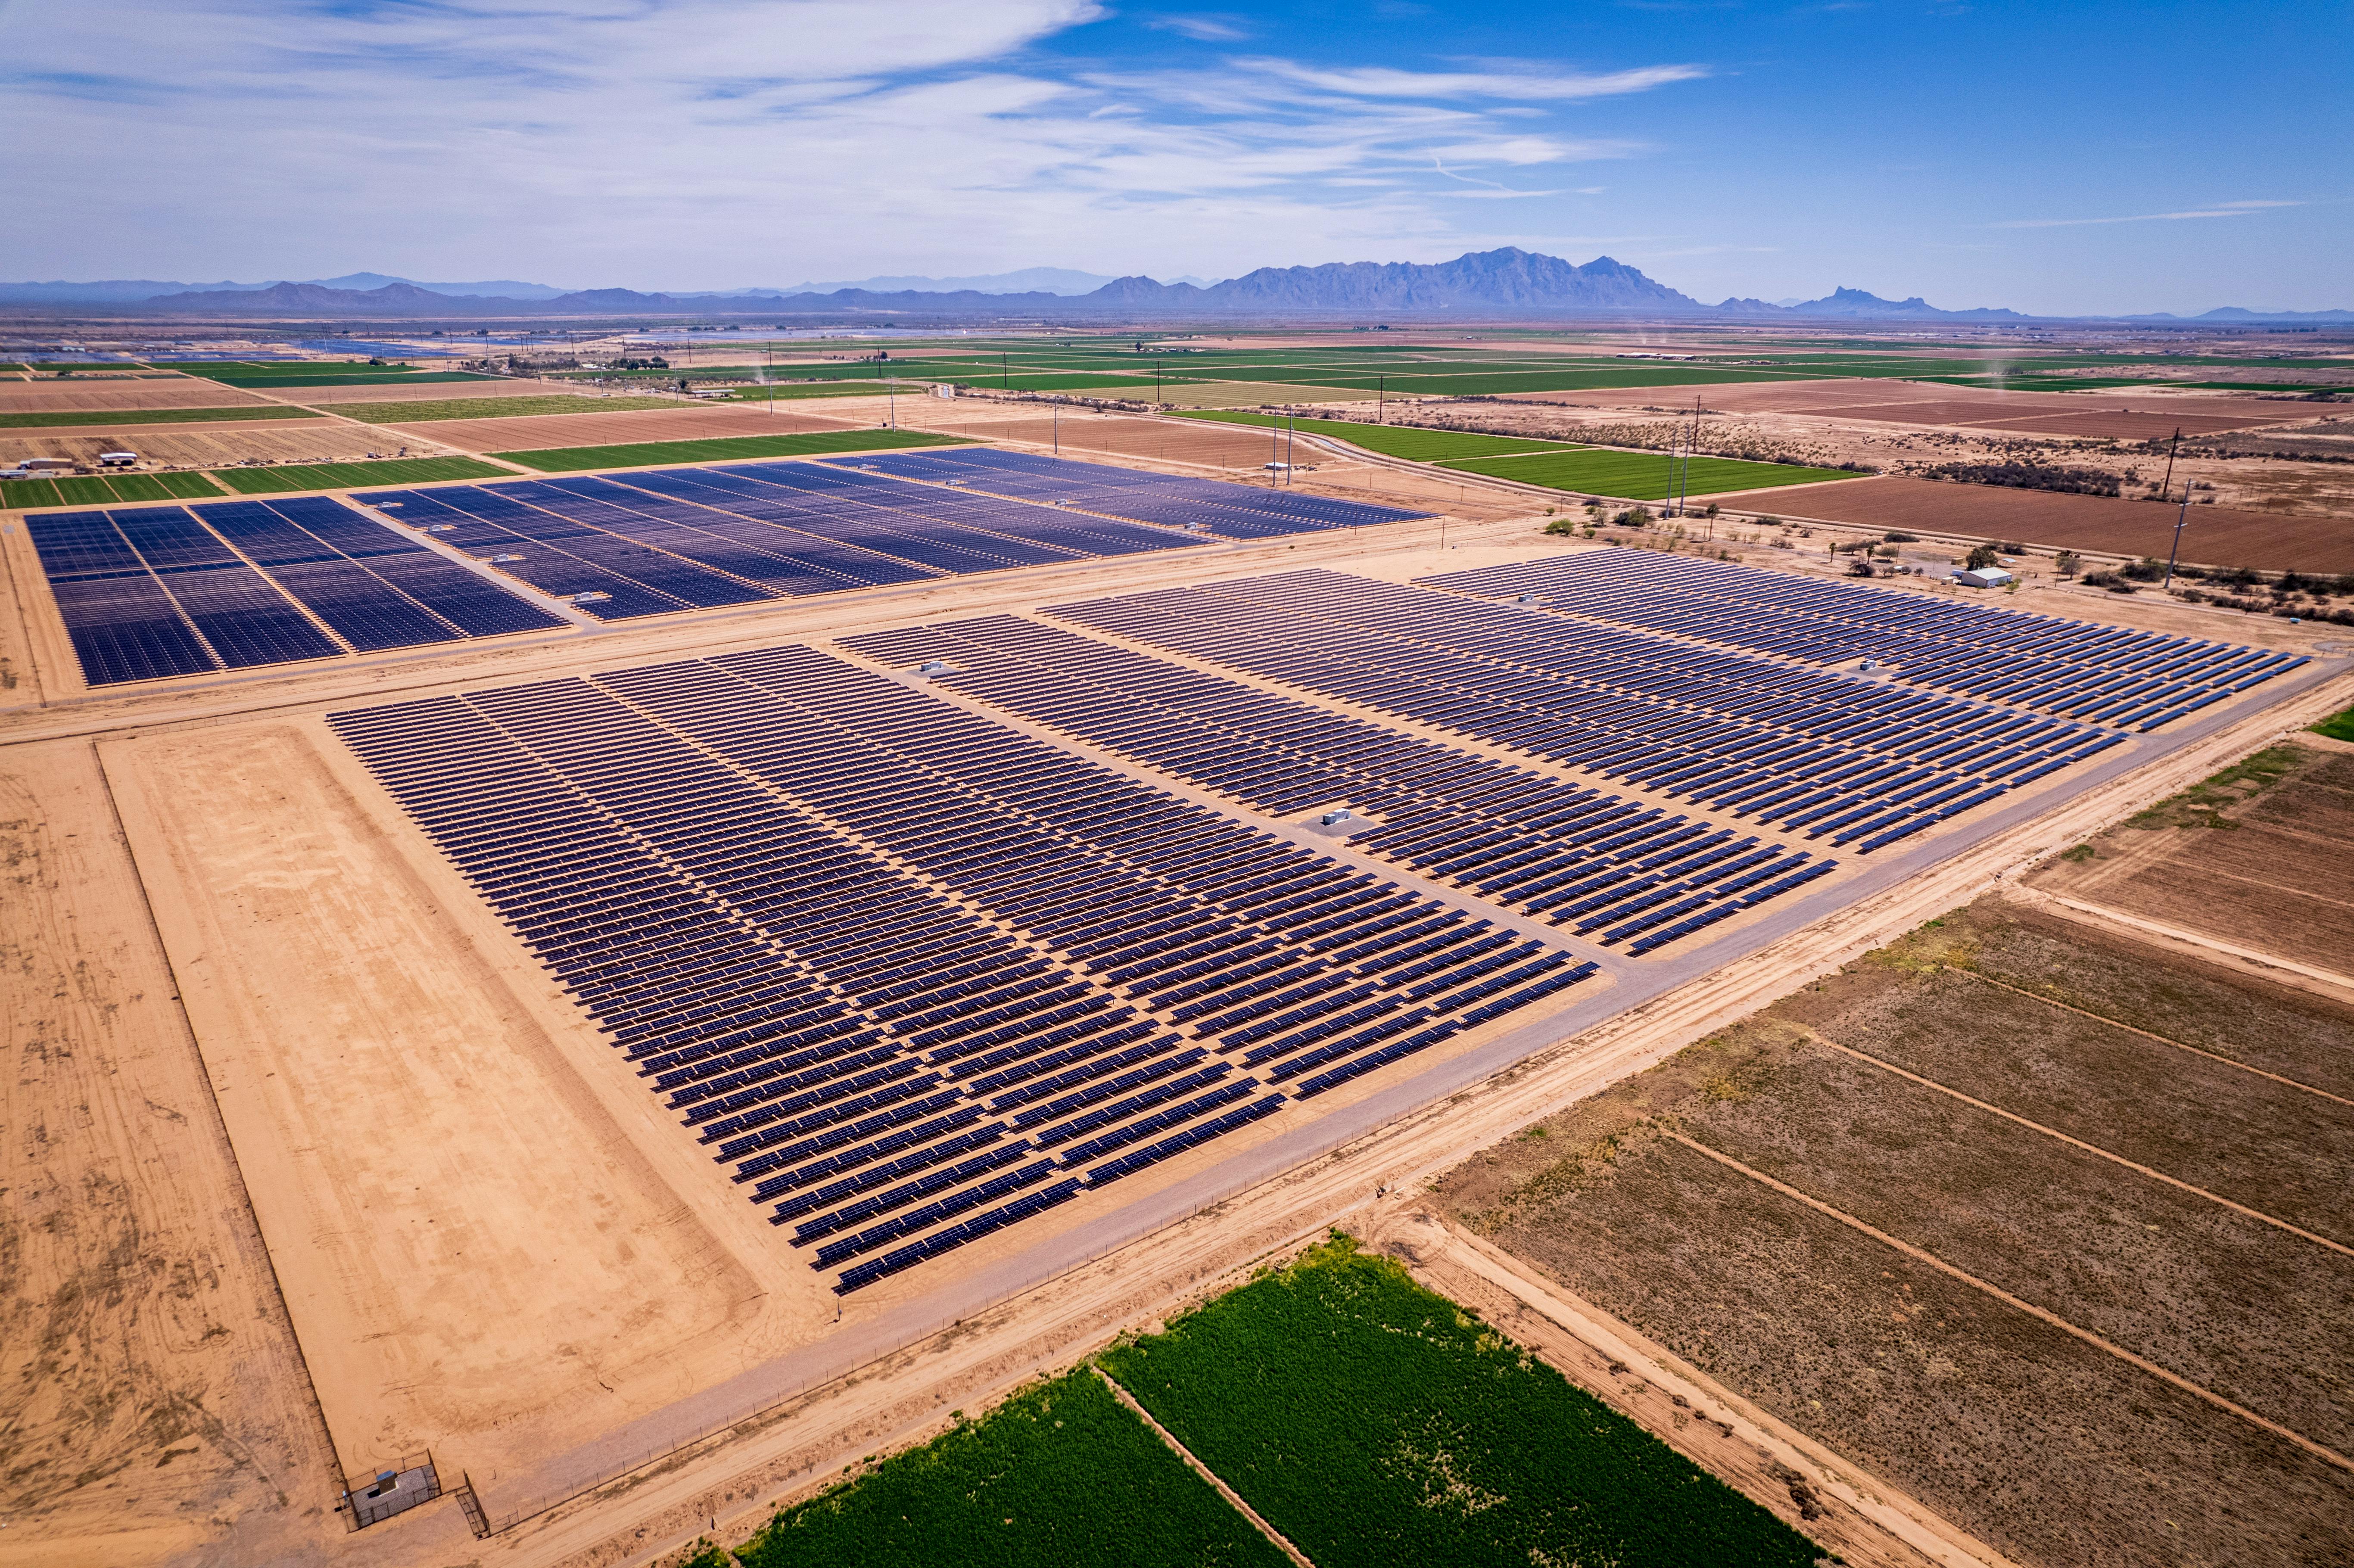 A large-scale solar farm business